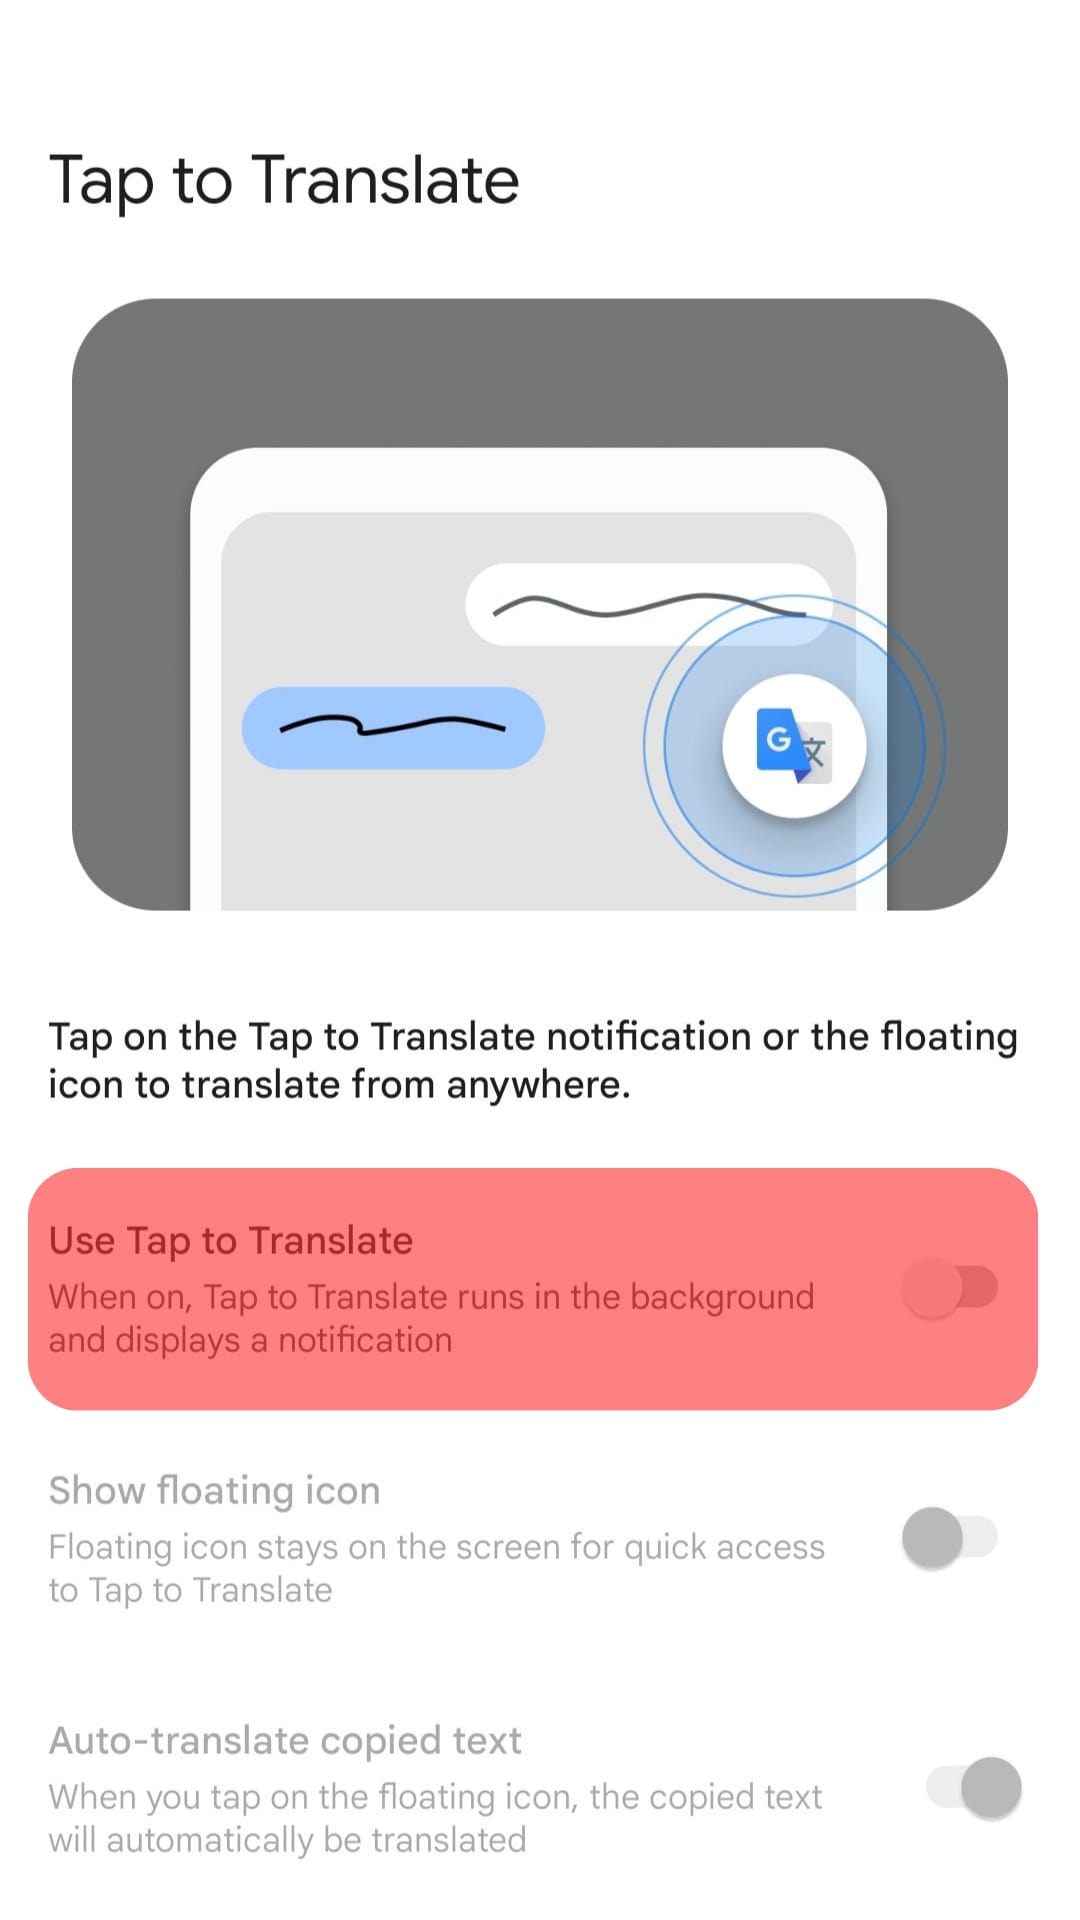 Enable The Translation Tool